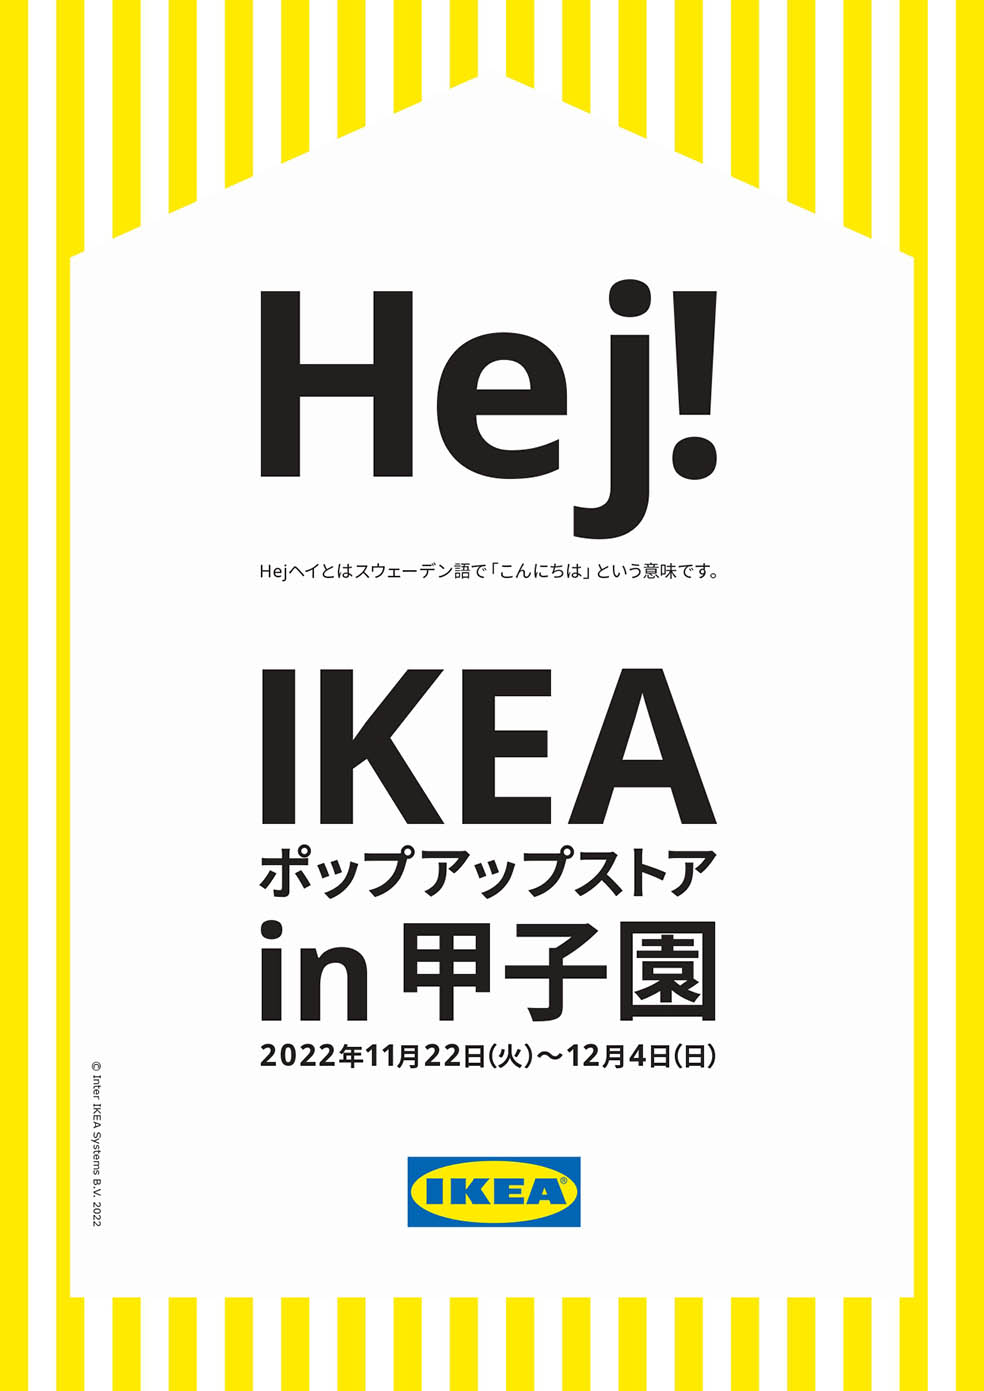 LifTe北欧の暮らし LifTe スウェーデン イケア IKEA ポップアップ ポップアップストア 甲子園 期間限定